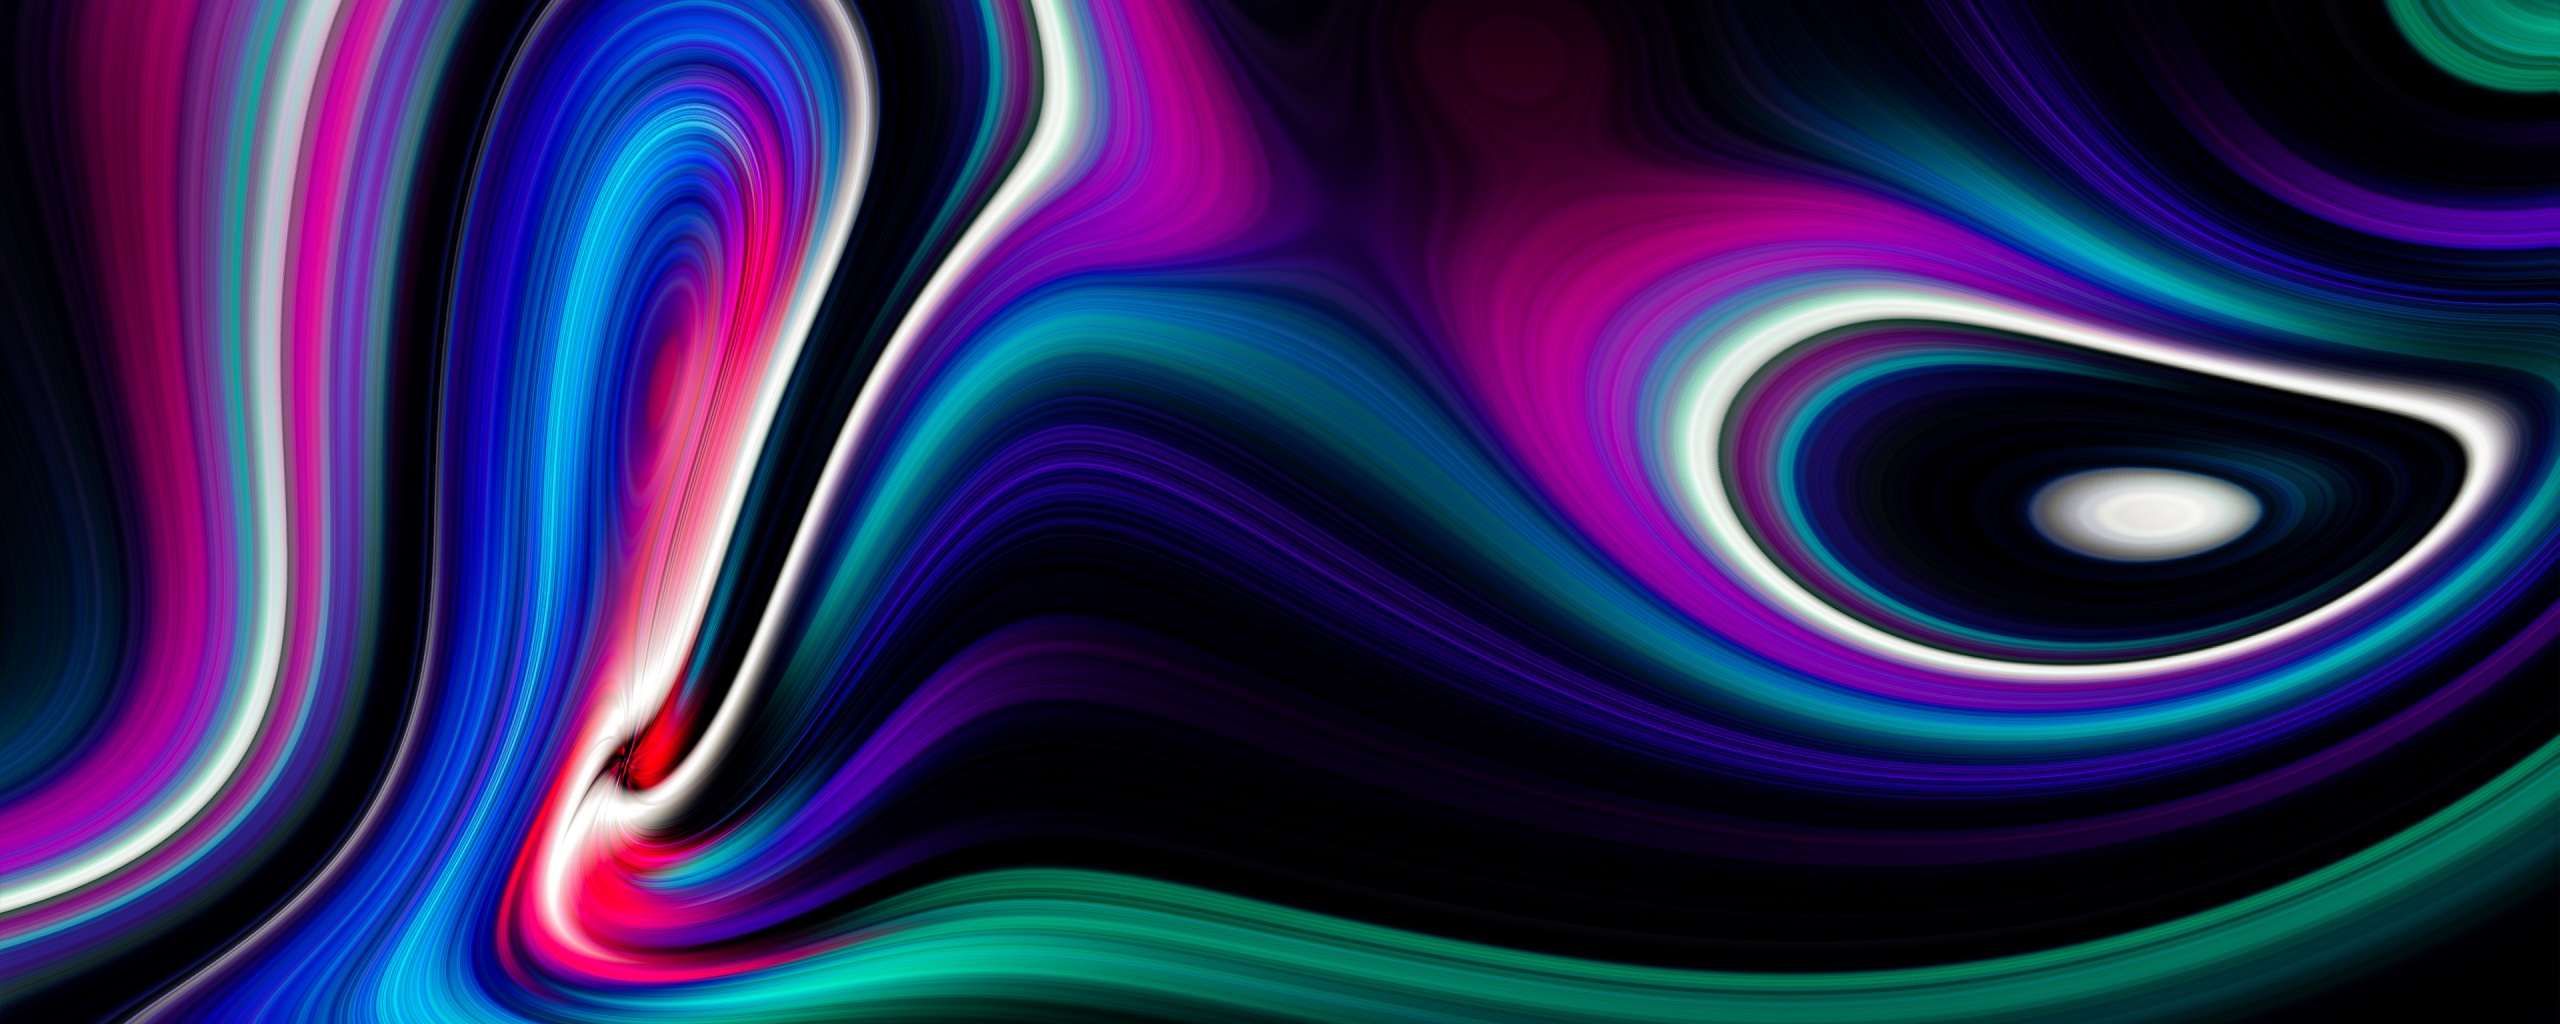 Abstract Swirl Art Wallpaper 4K